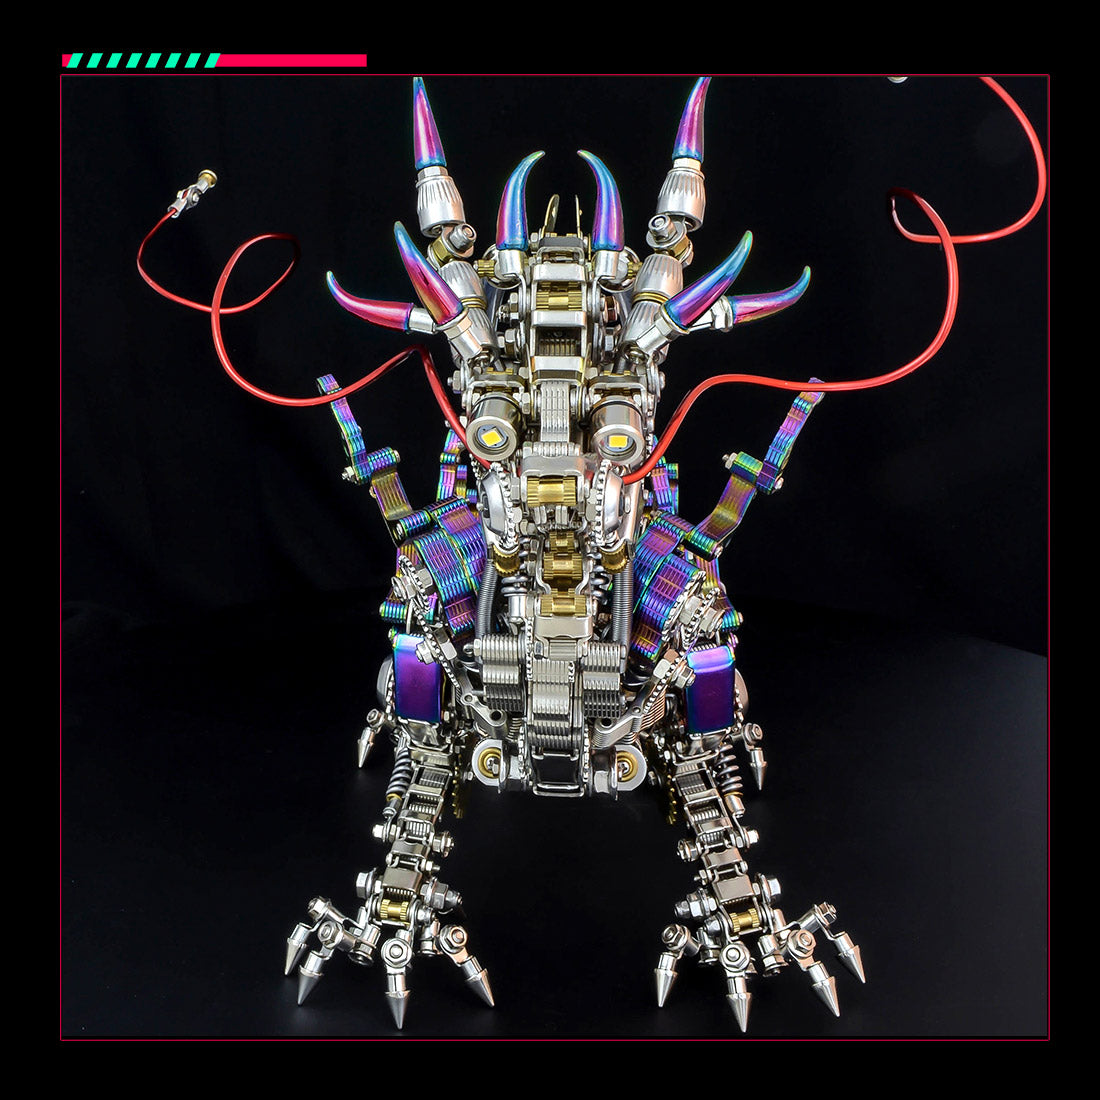 50cm Cyberpunk Mythical Dragon 3D Metal Puzzle Kits - stirlingkit